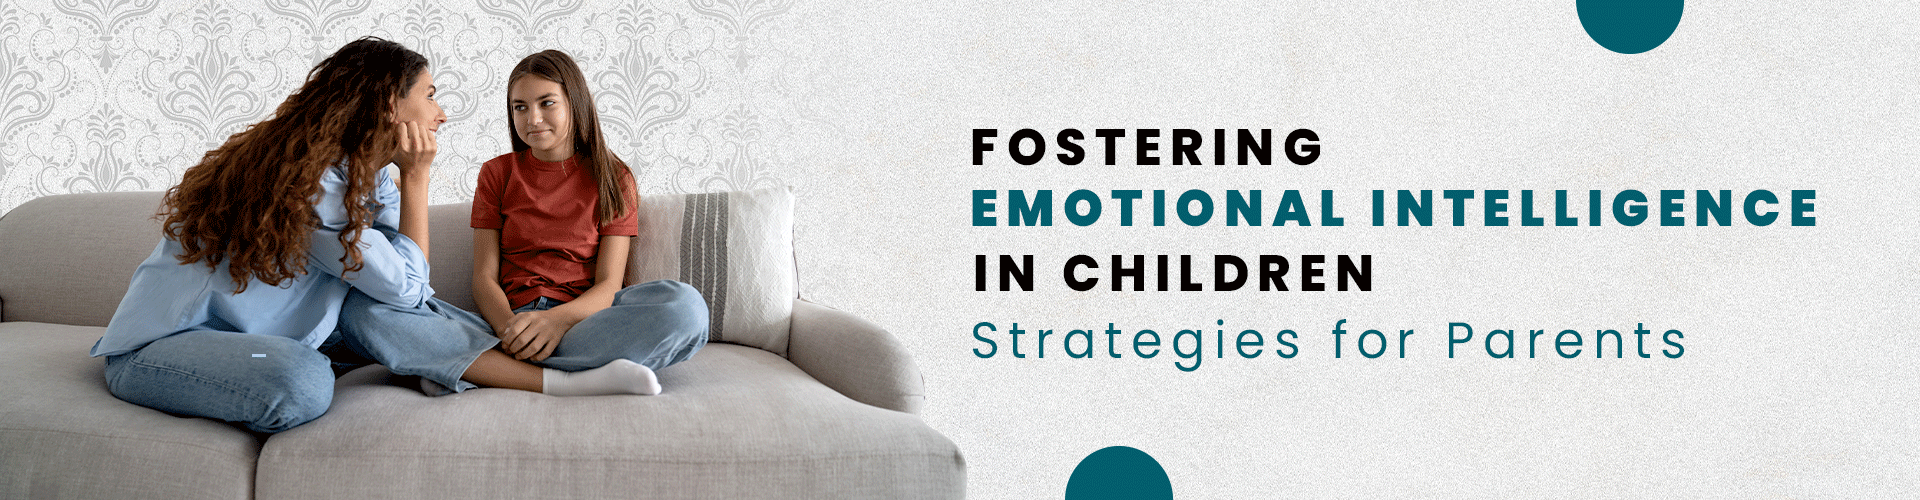 Fostering Emotional Intelligence in Children